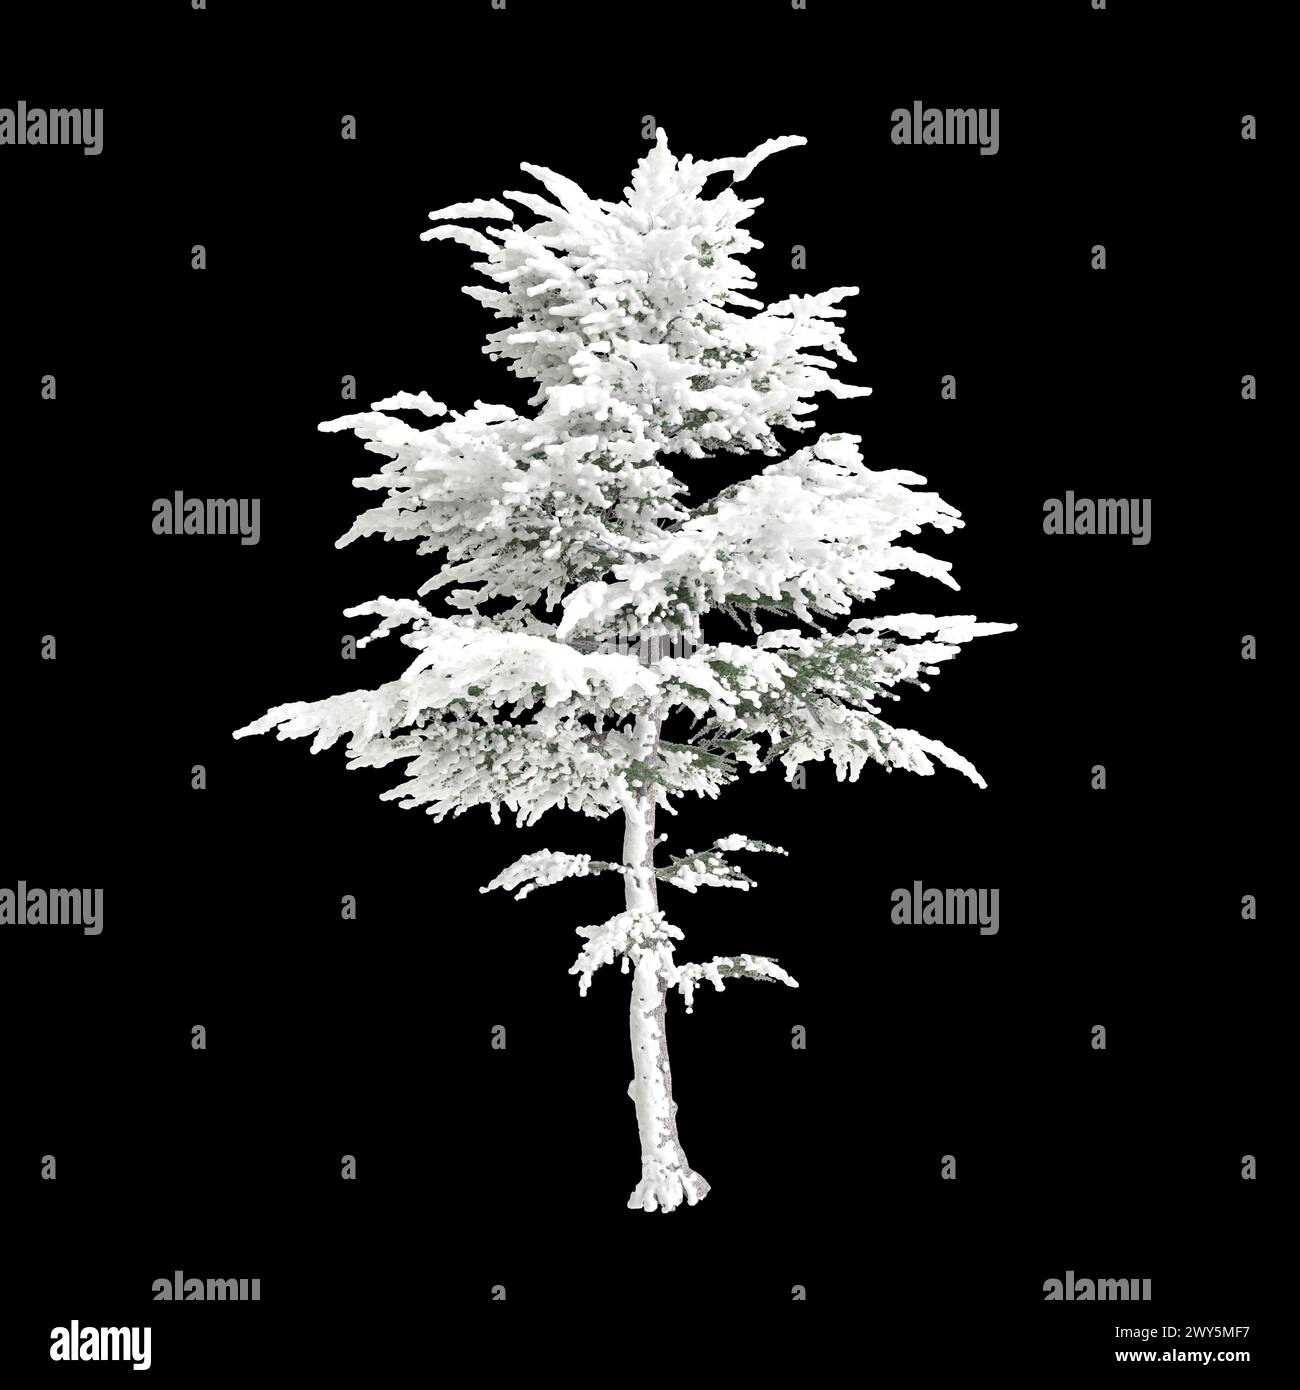 3d illustration of Cedrus libani snow covered tree isolated on black background Stock Photo